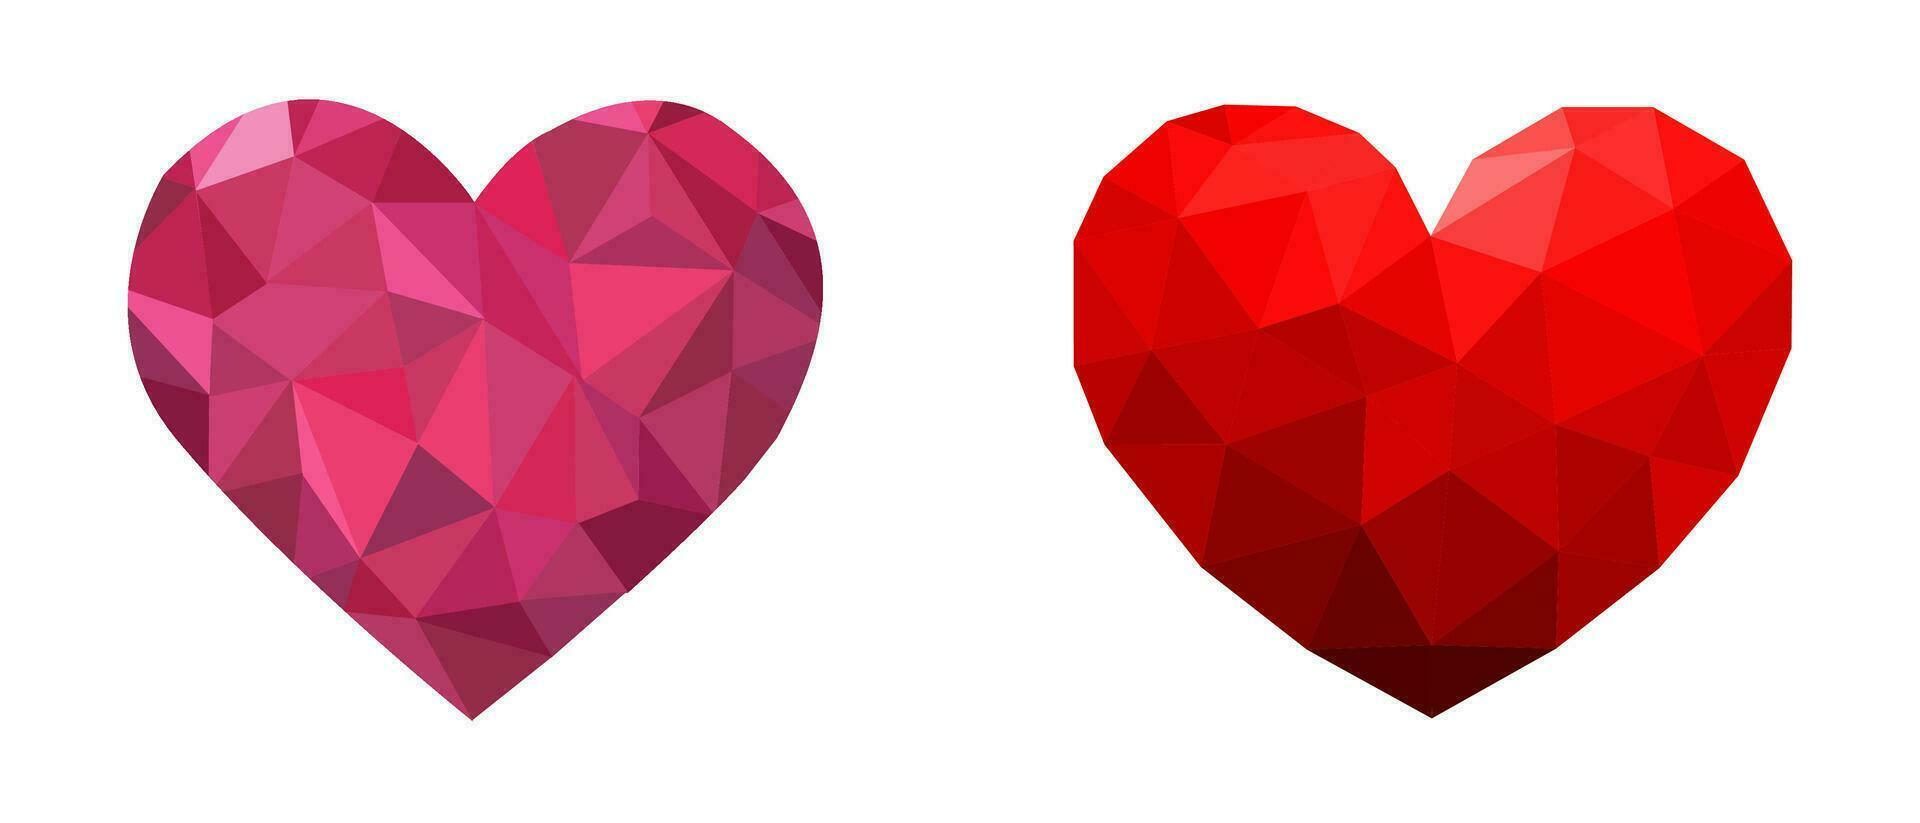 Polygonal Heart Set vector